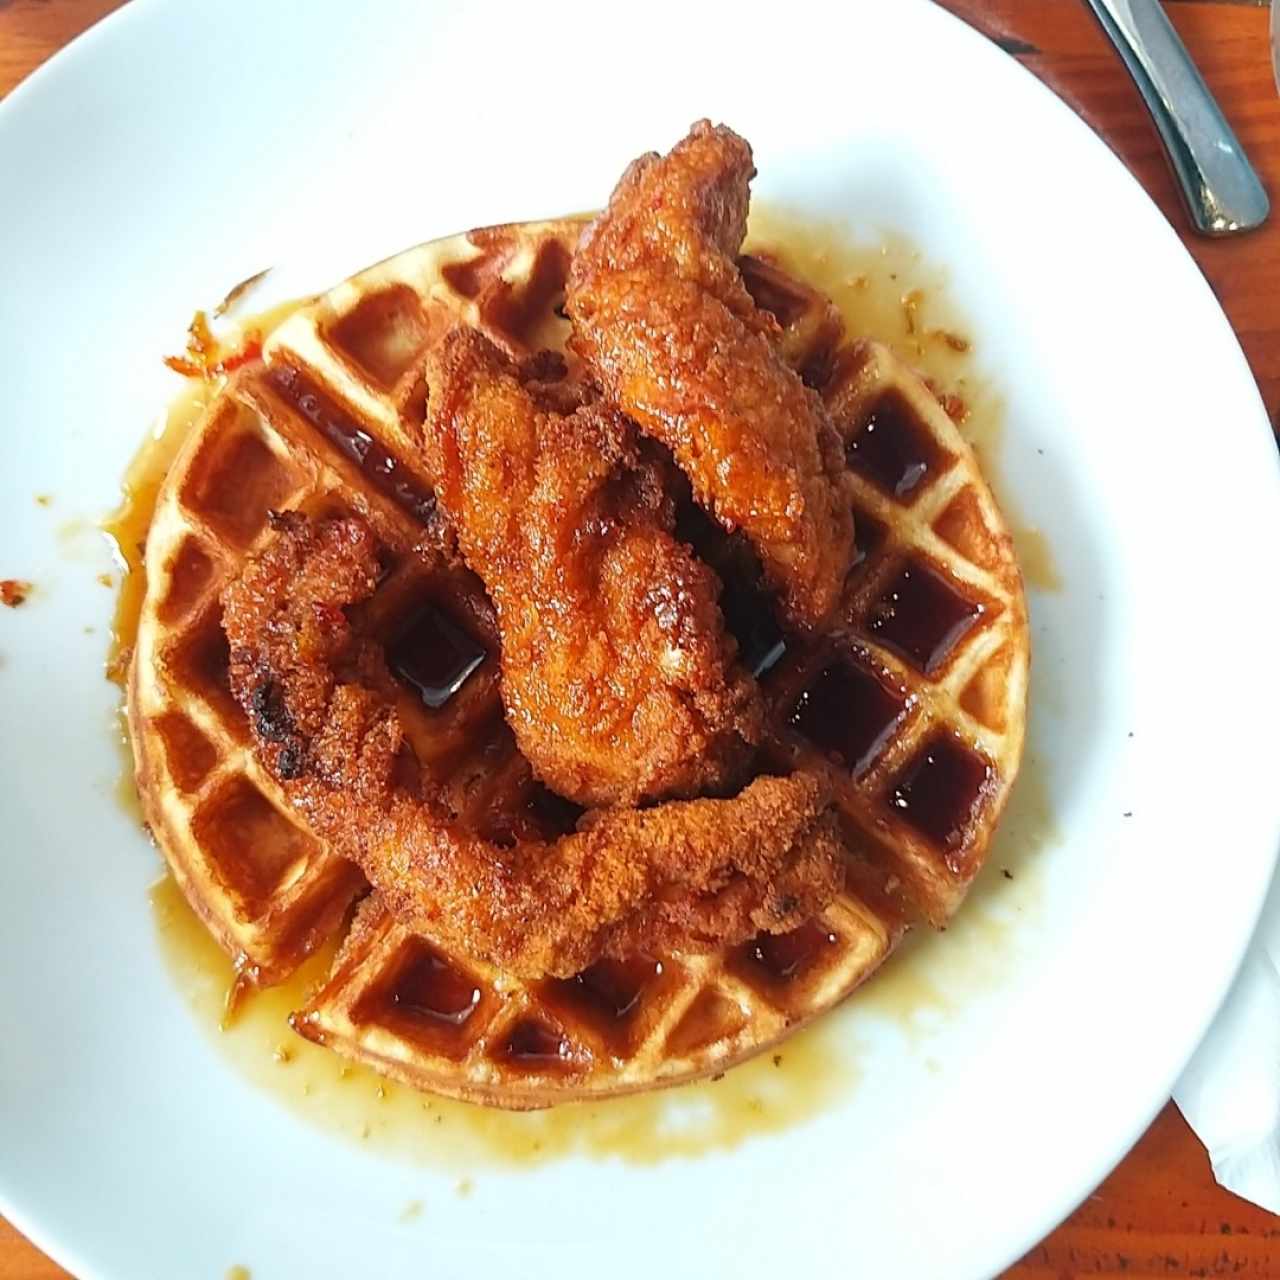 Brunch - Chicken and Waffles